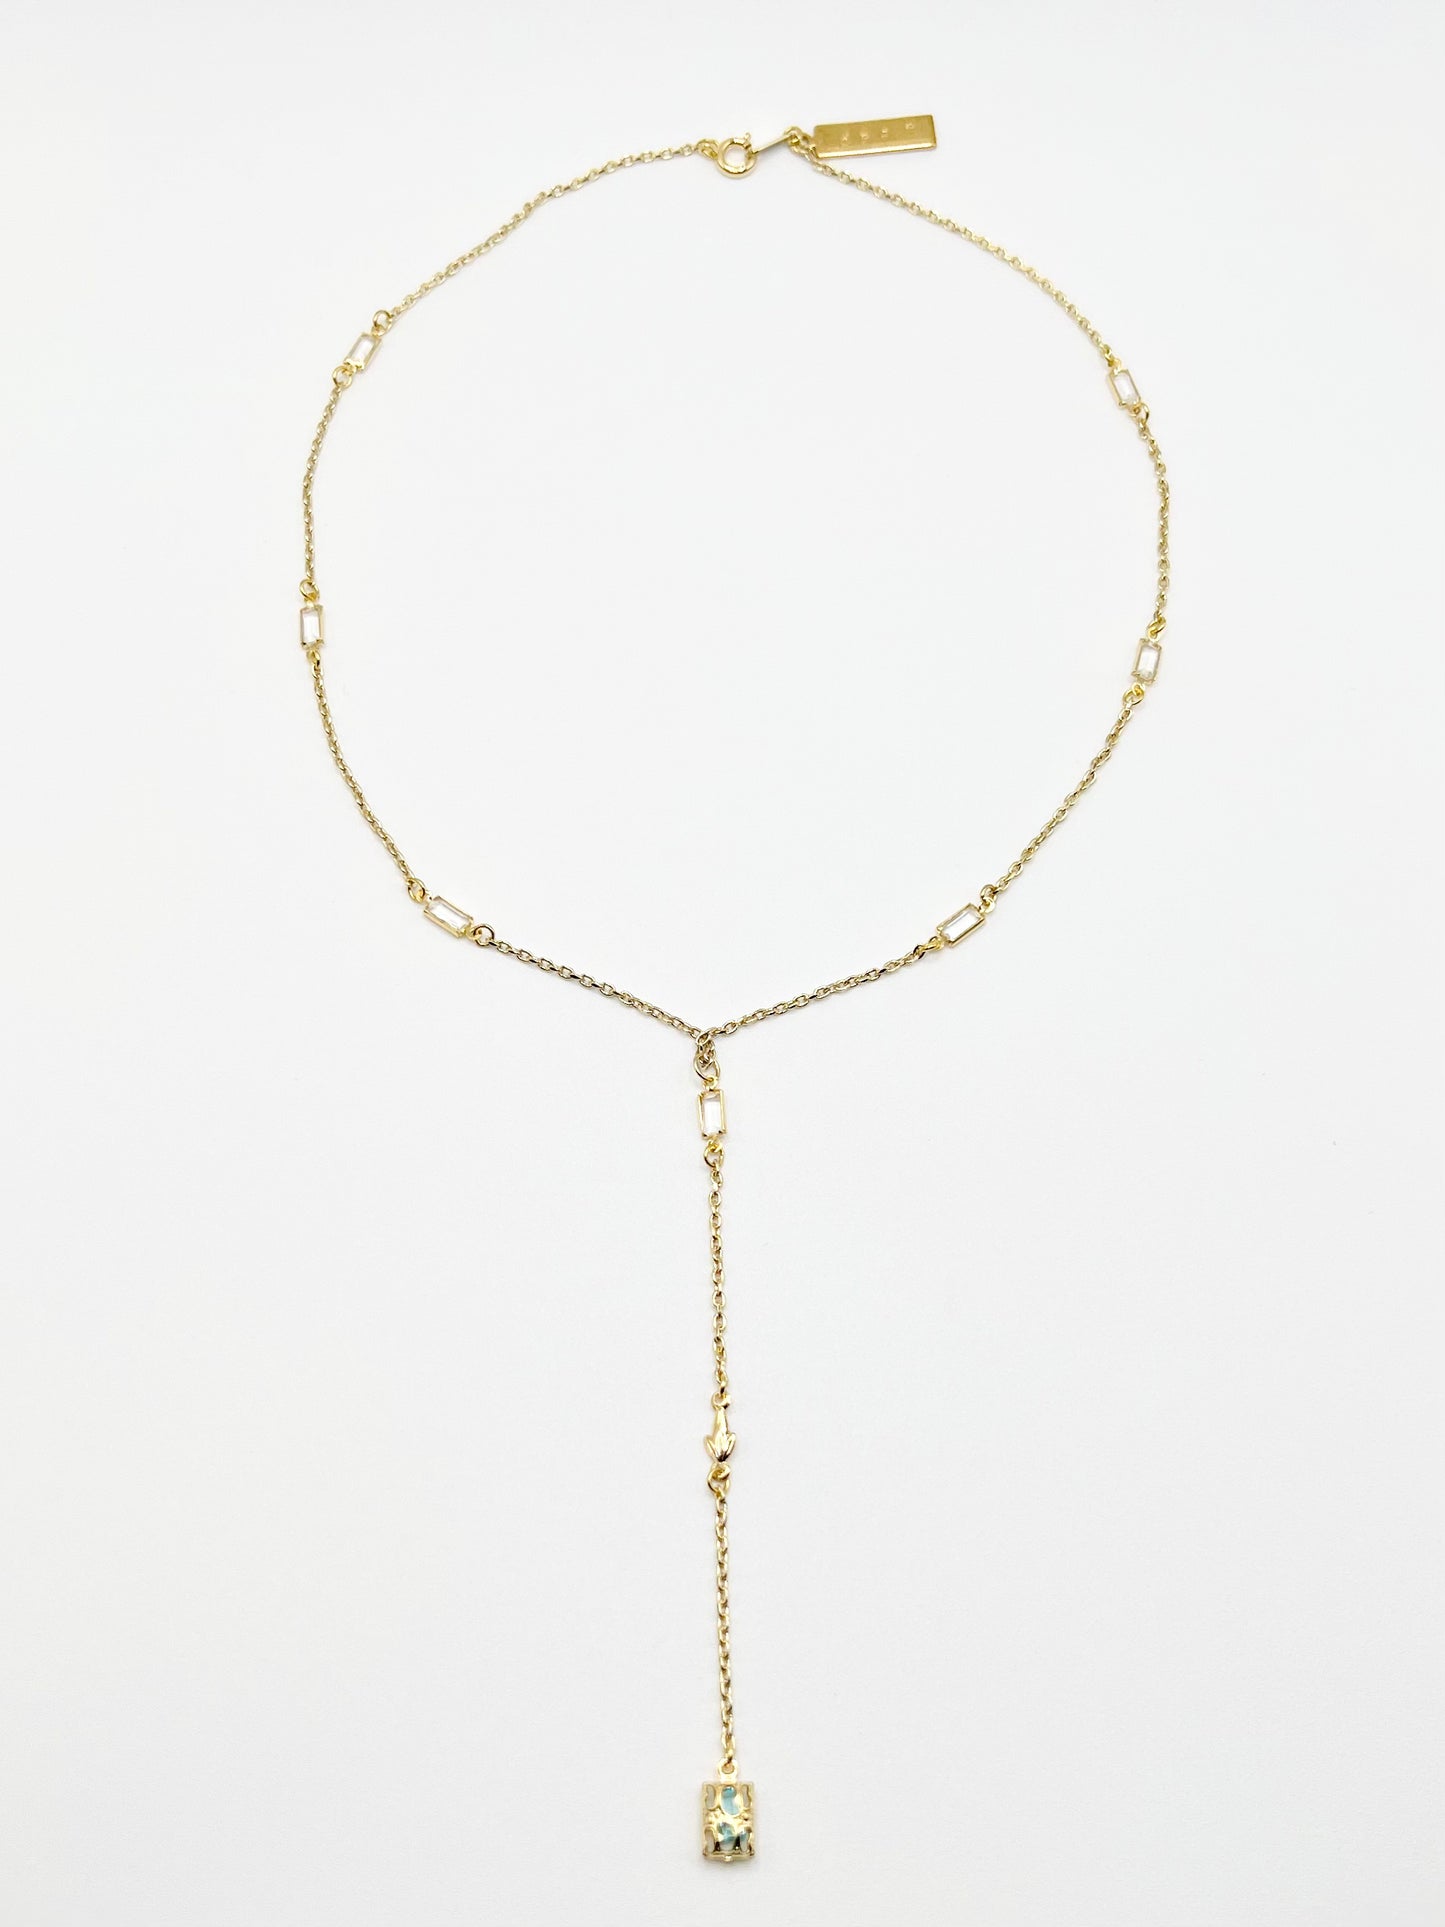 NW basket motif necklace - Gold